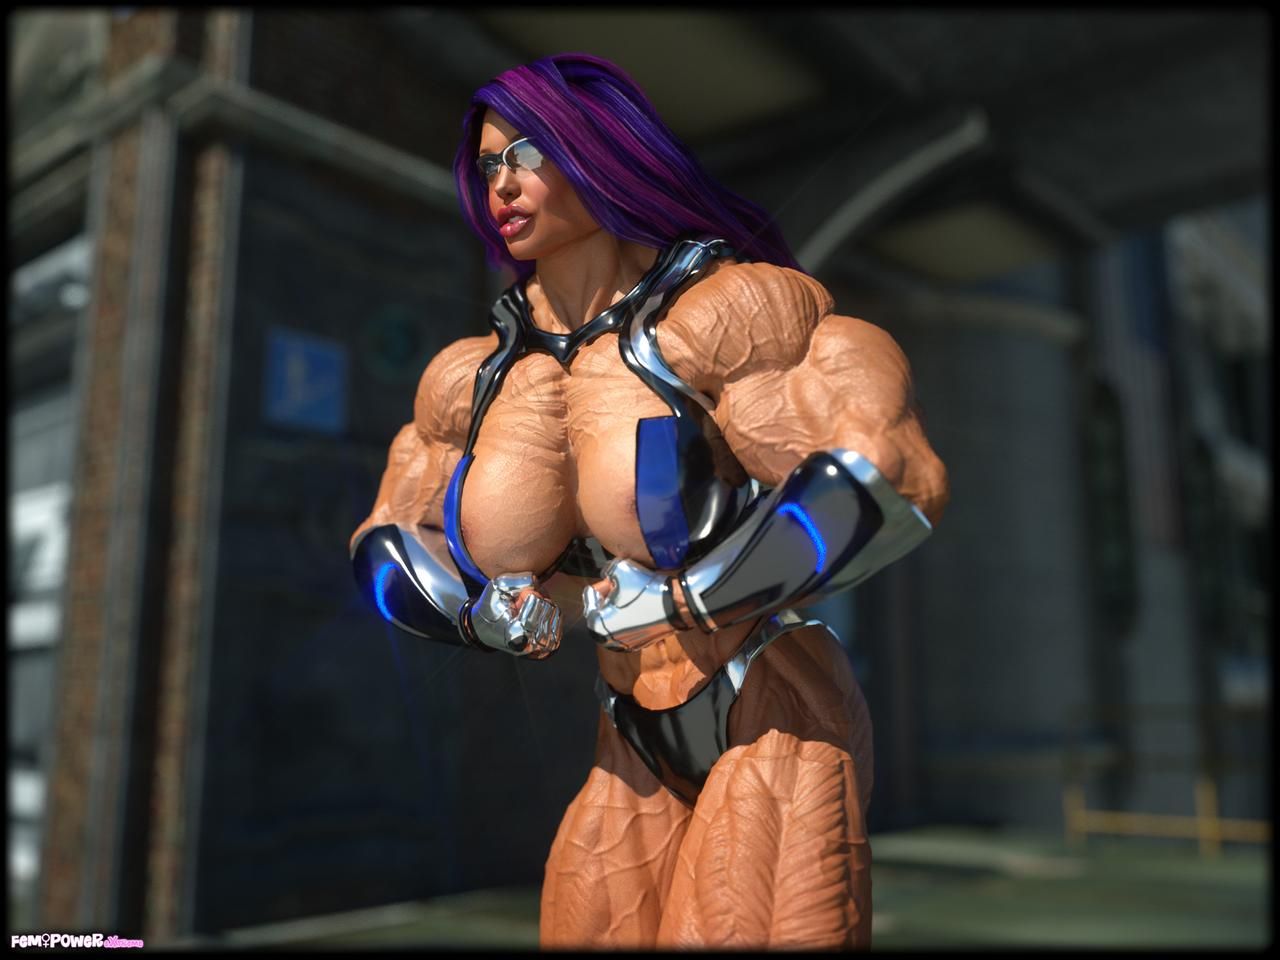 Muscle girls 3D models_ part 2 by Tigersan 192